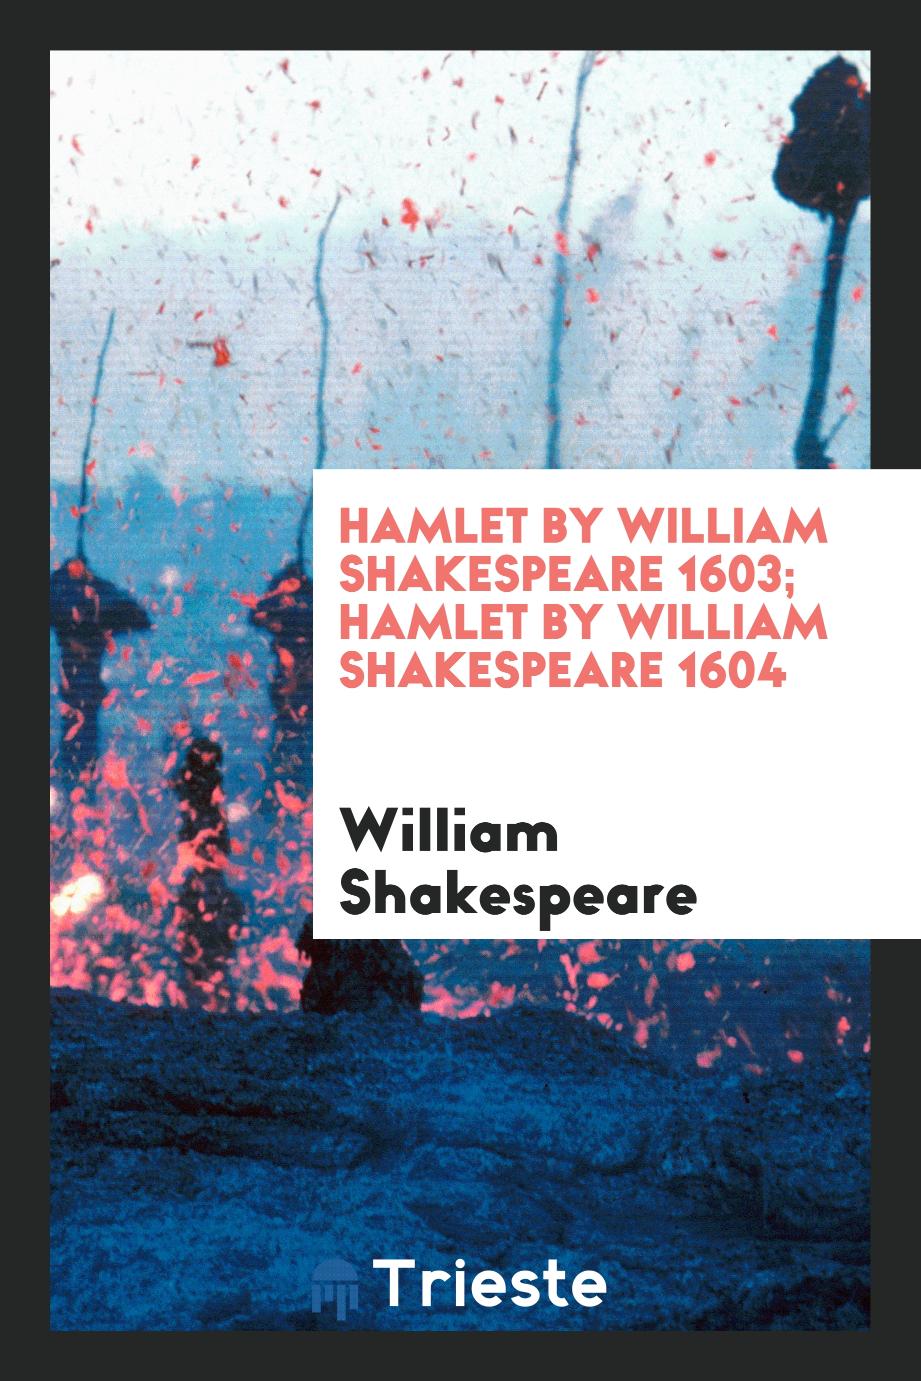 Hamlet by William Shakespeare 1603; Hamlet by William Shakespeare 1604